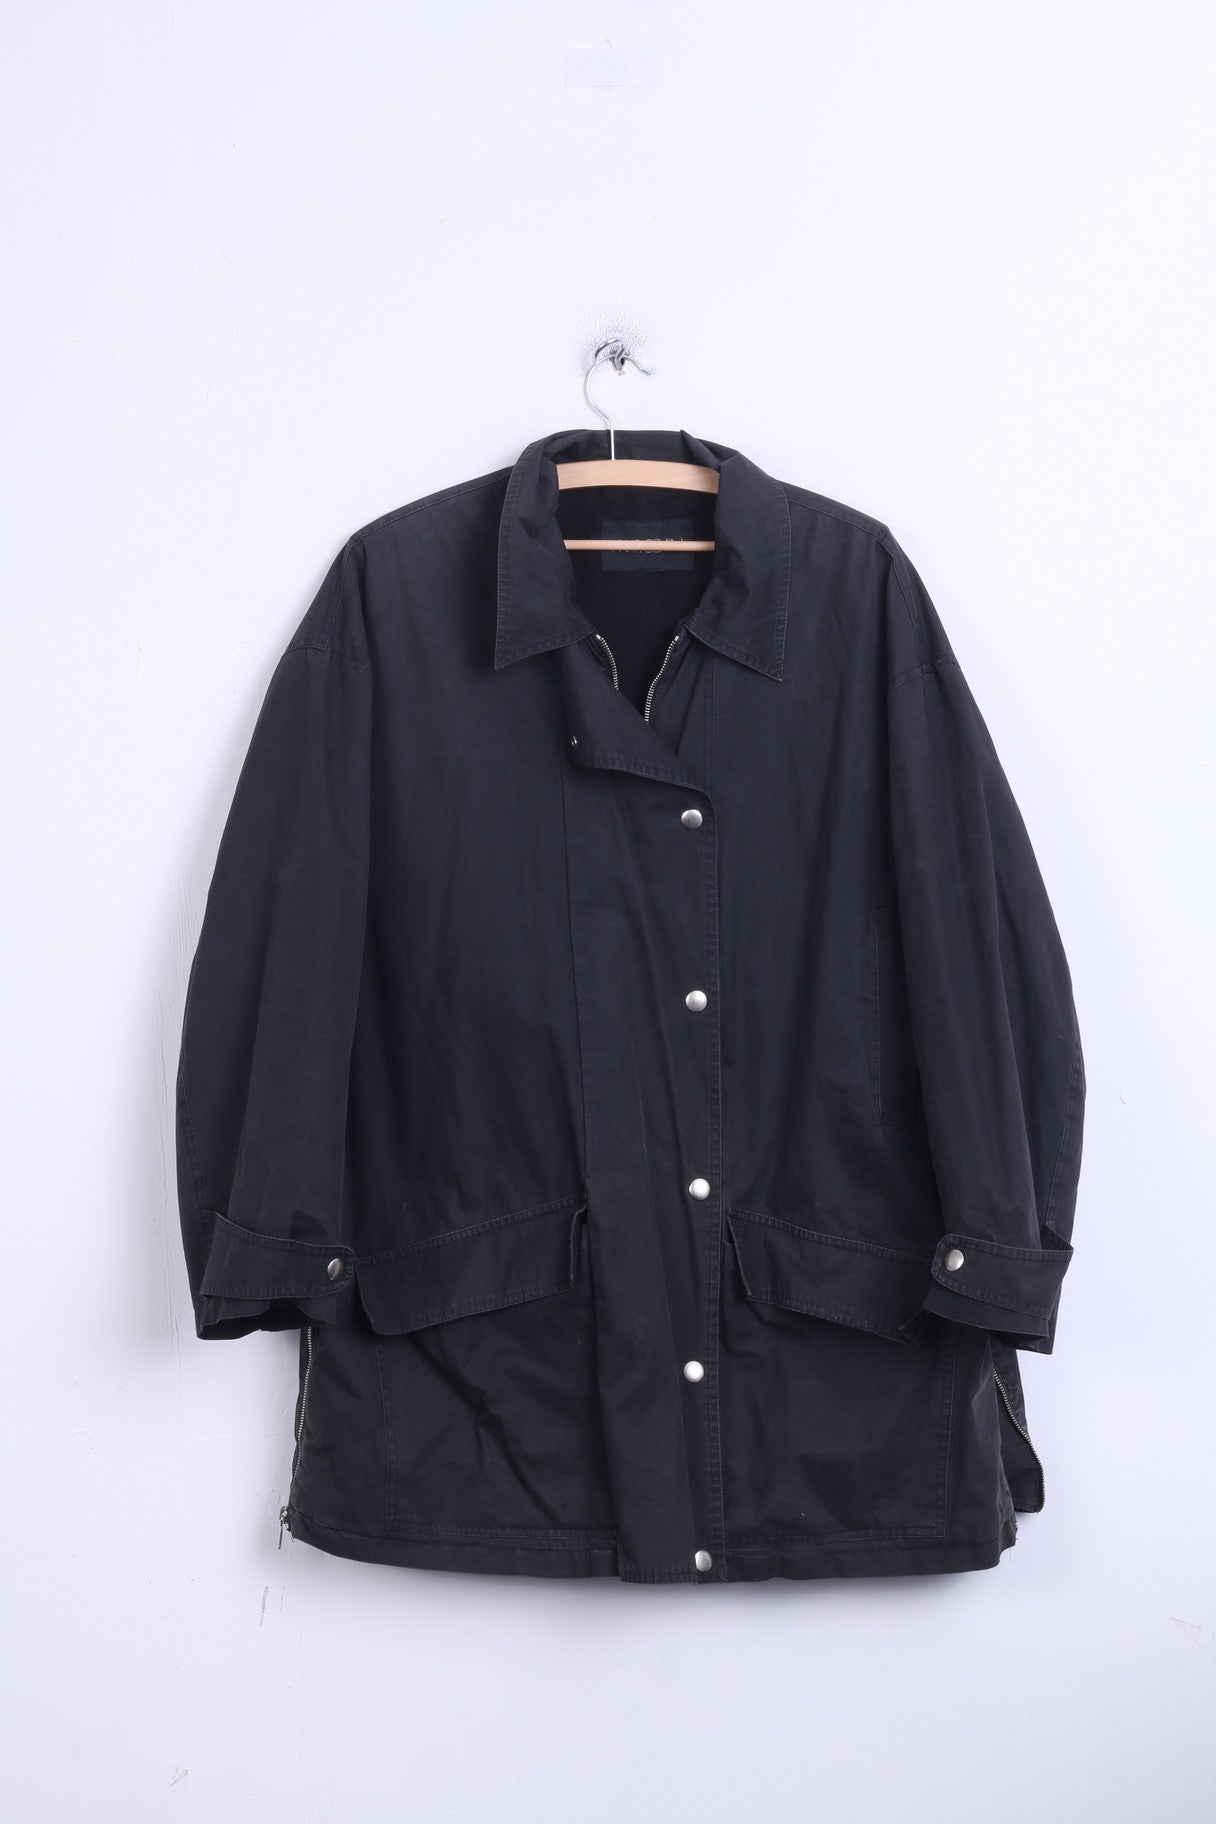 MARCCAIN Mens 4 2XL Jacket Black Cotton Washed Look - RetrospectClothes